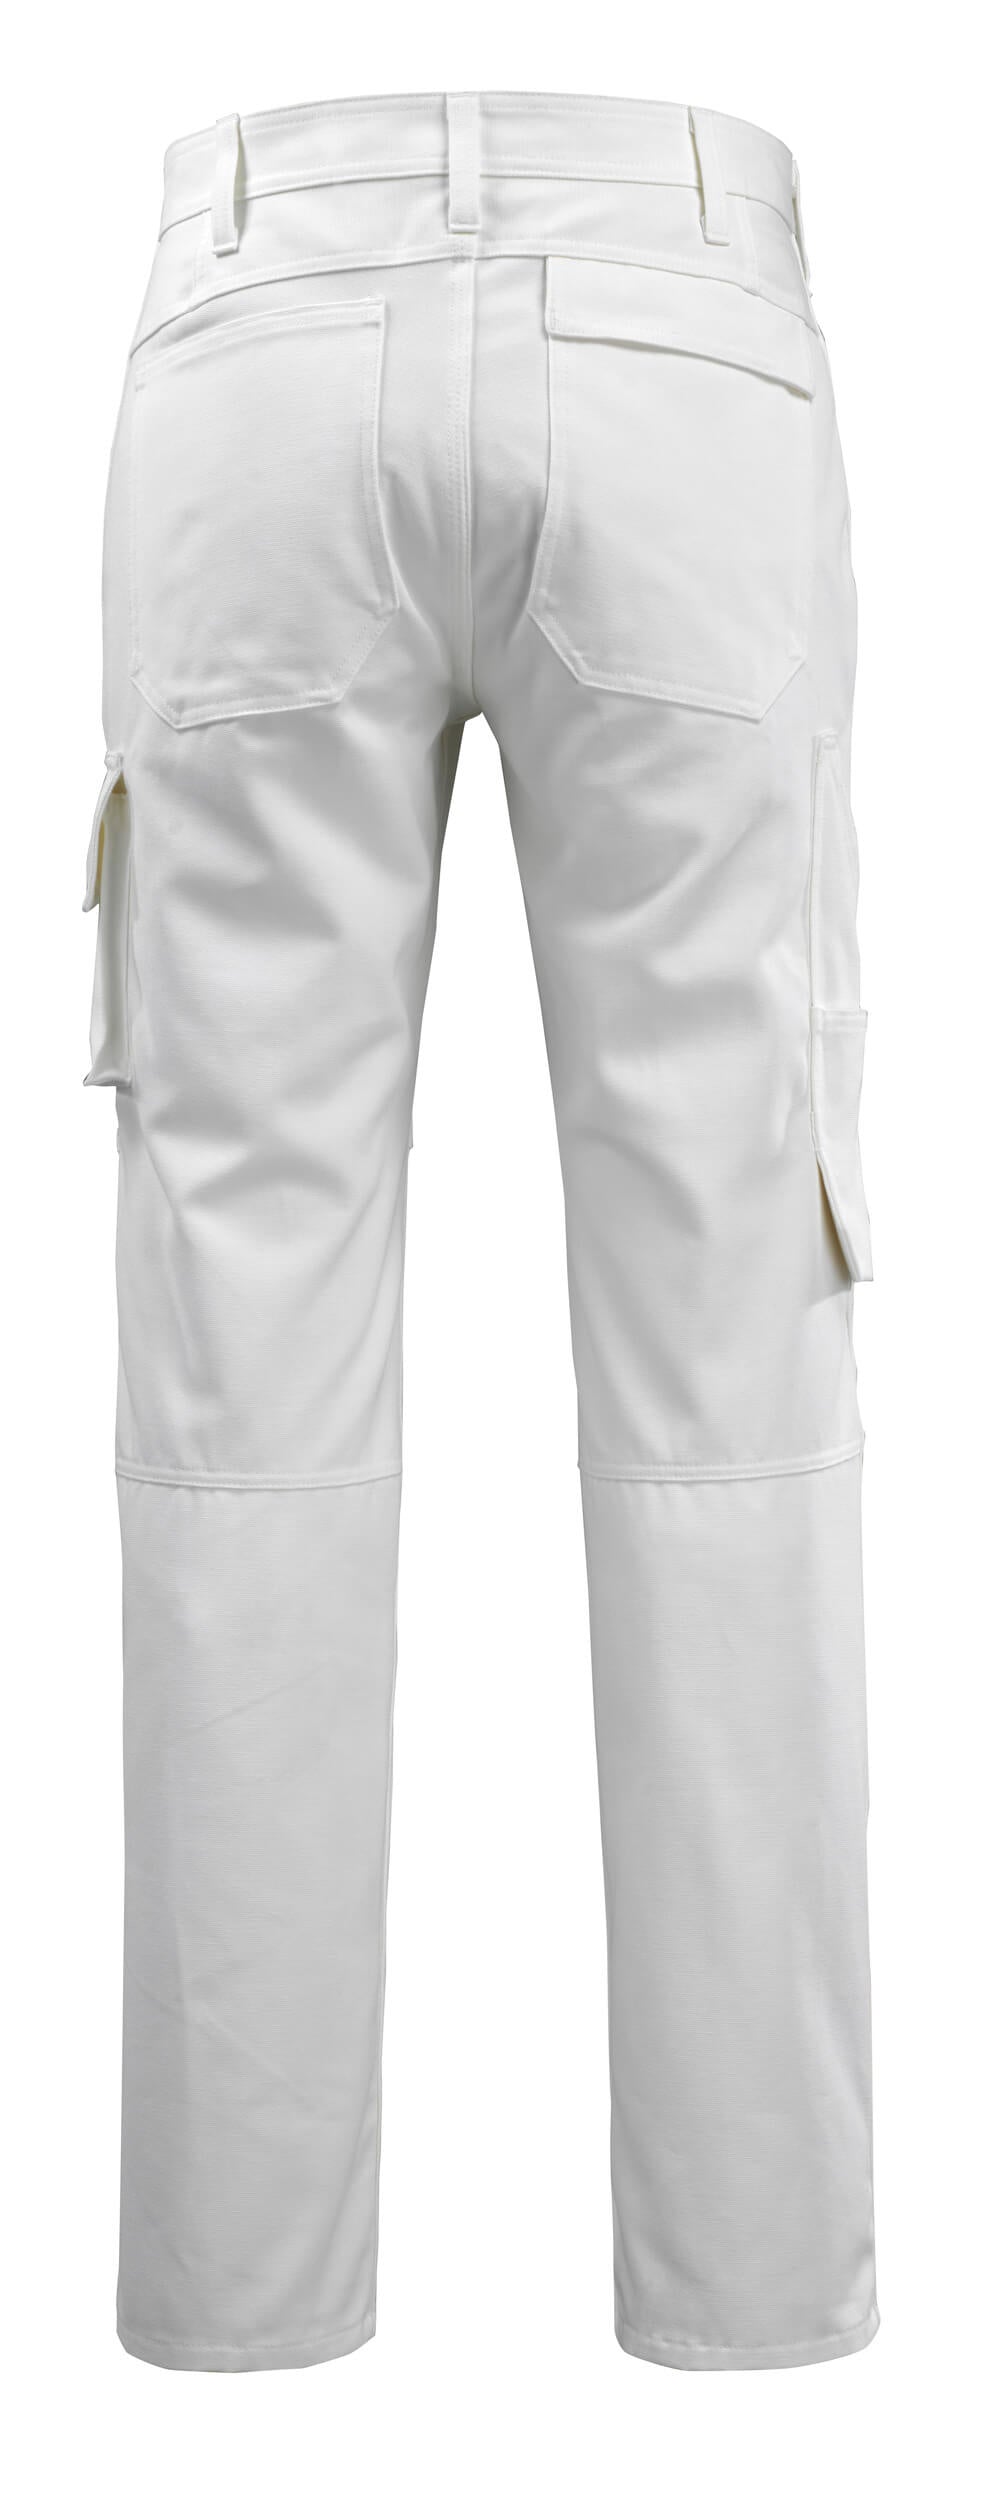 MACMICHAEL® WORKWEAR Jardim Trousers with kneepad pockets 14579 white